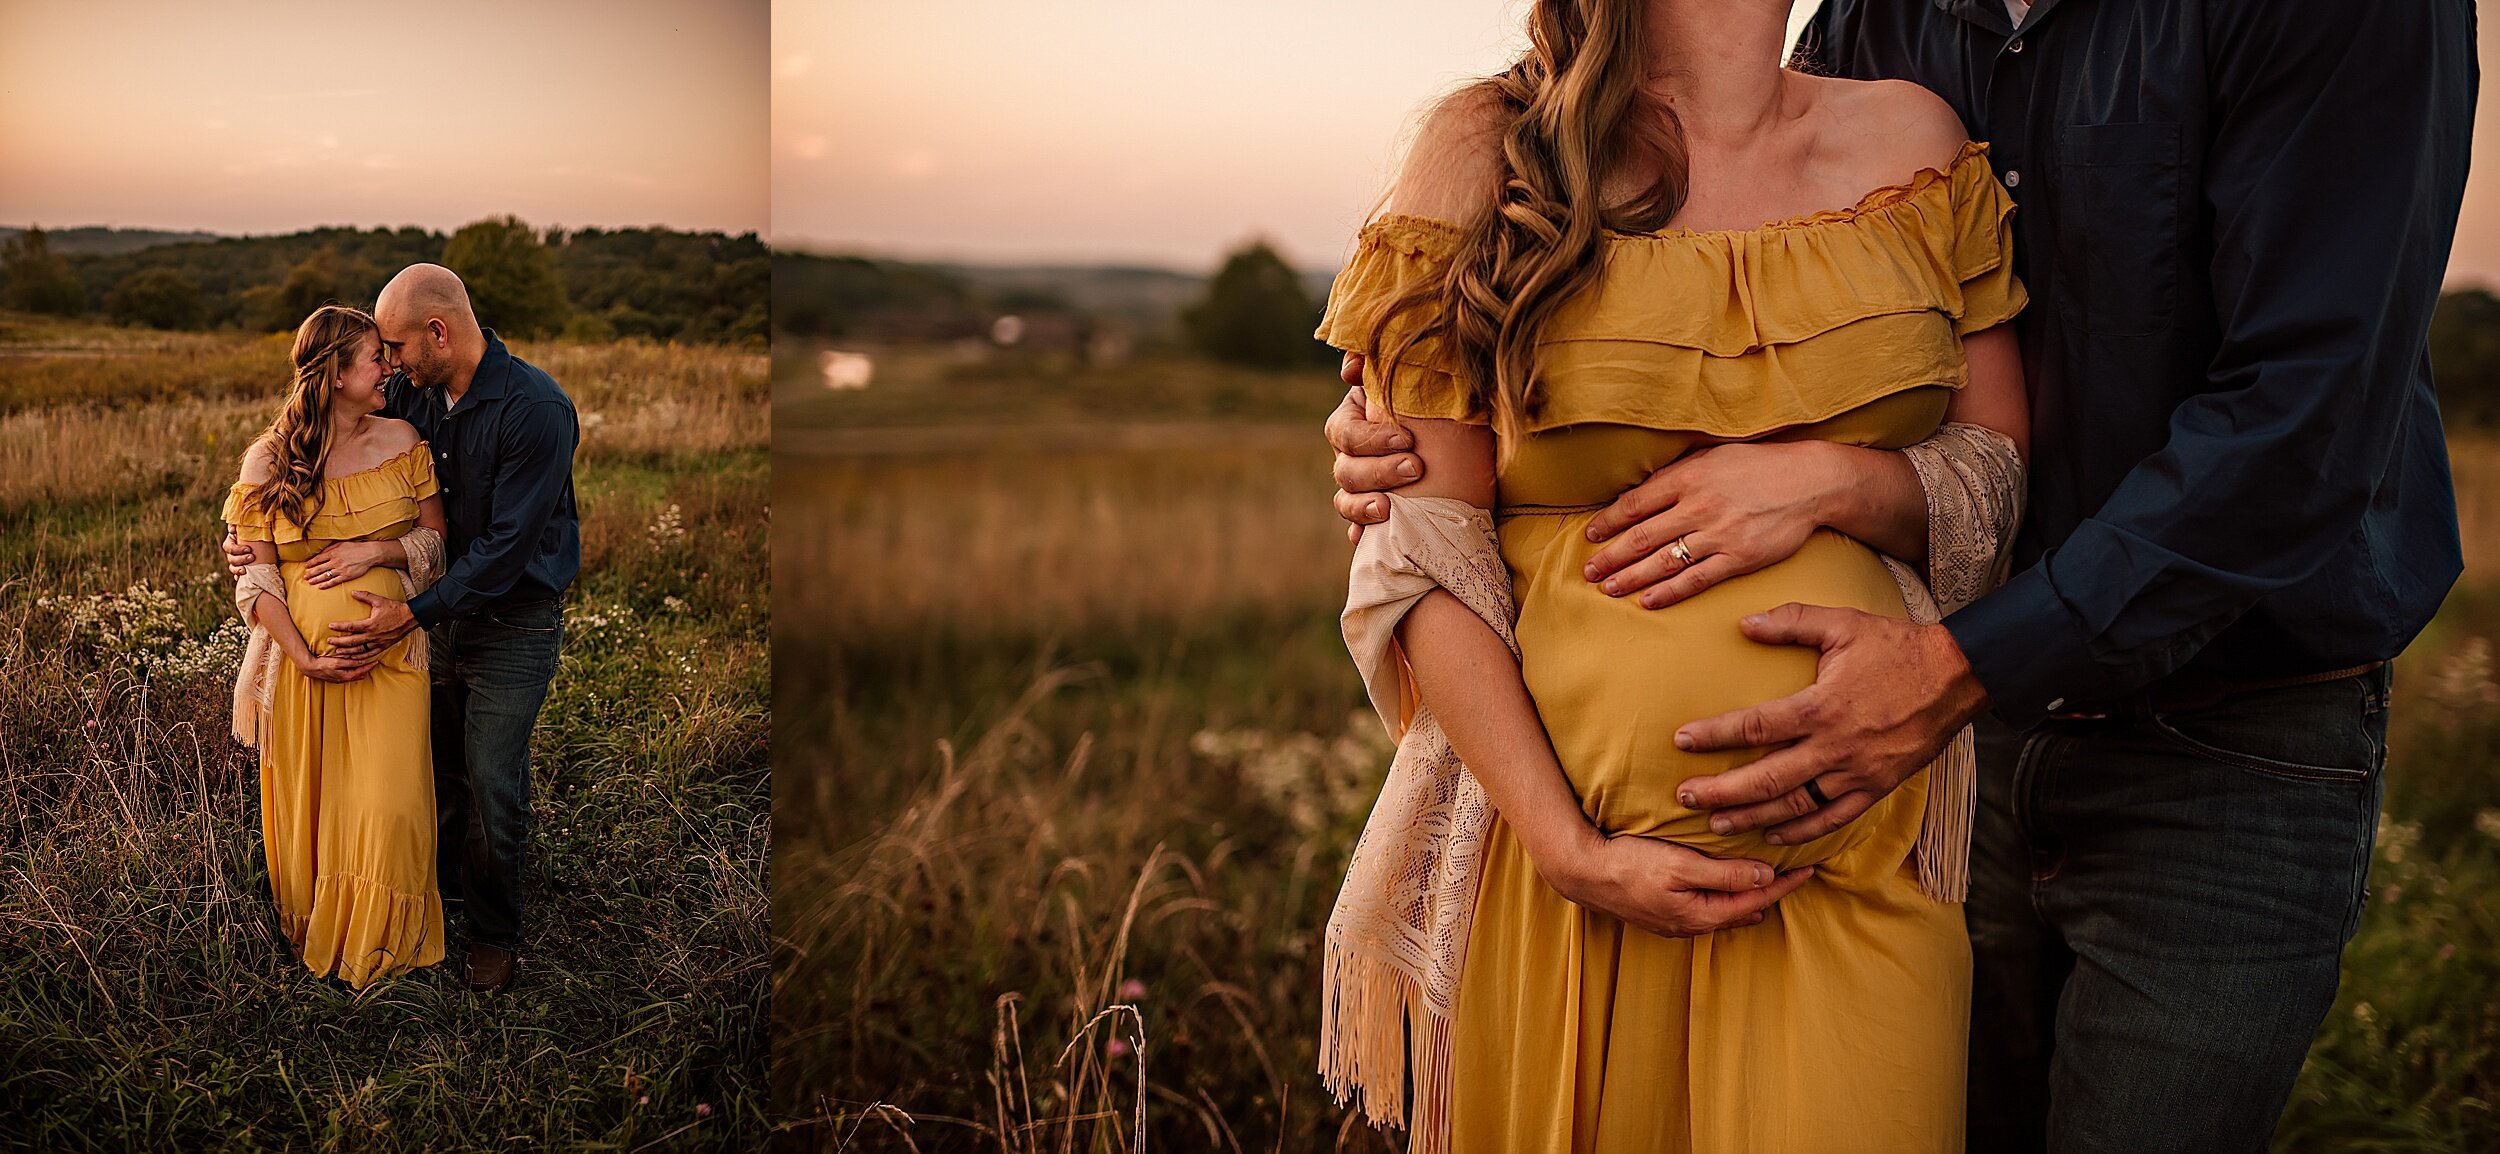 canton-ohio-family-frye-family-park-maternity-session-outdoor-sunset-fields-lauren-grayson-photography_0131.jpeg